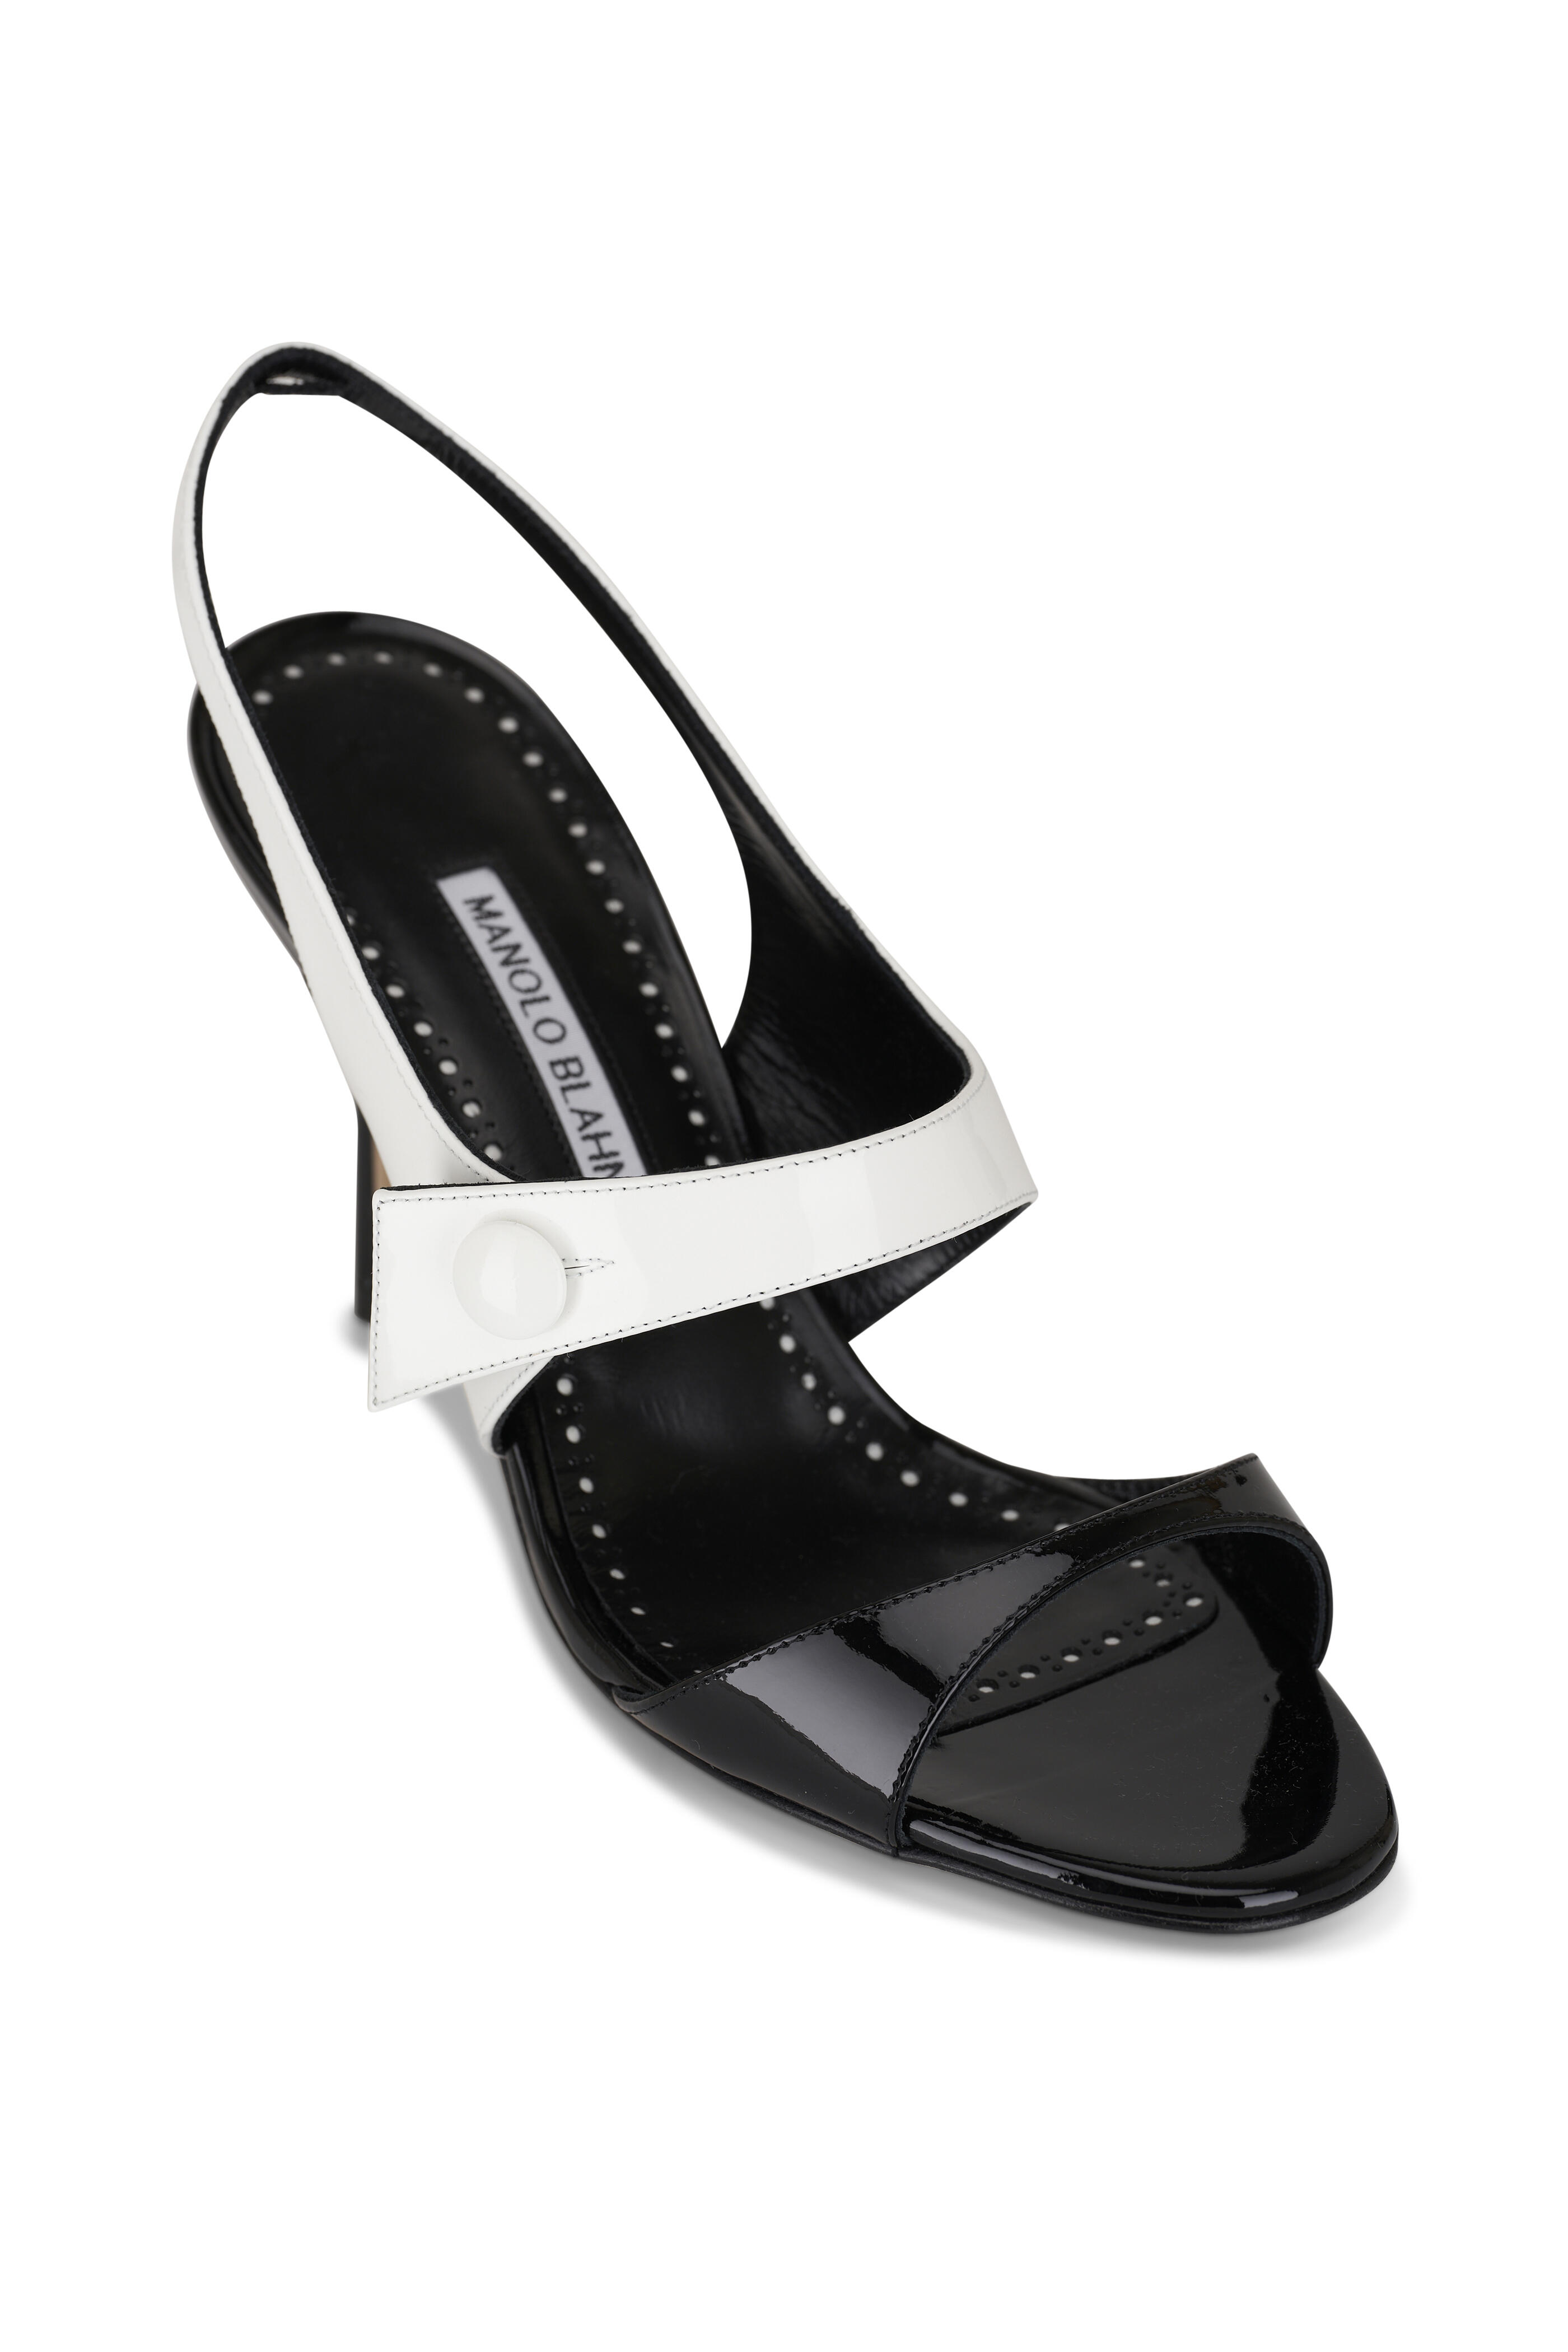 Manolo Blahnik - Climnetra Black & White Patent Sandal, 90mm